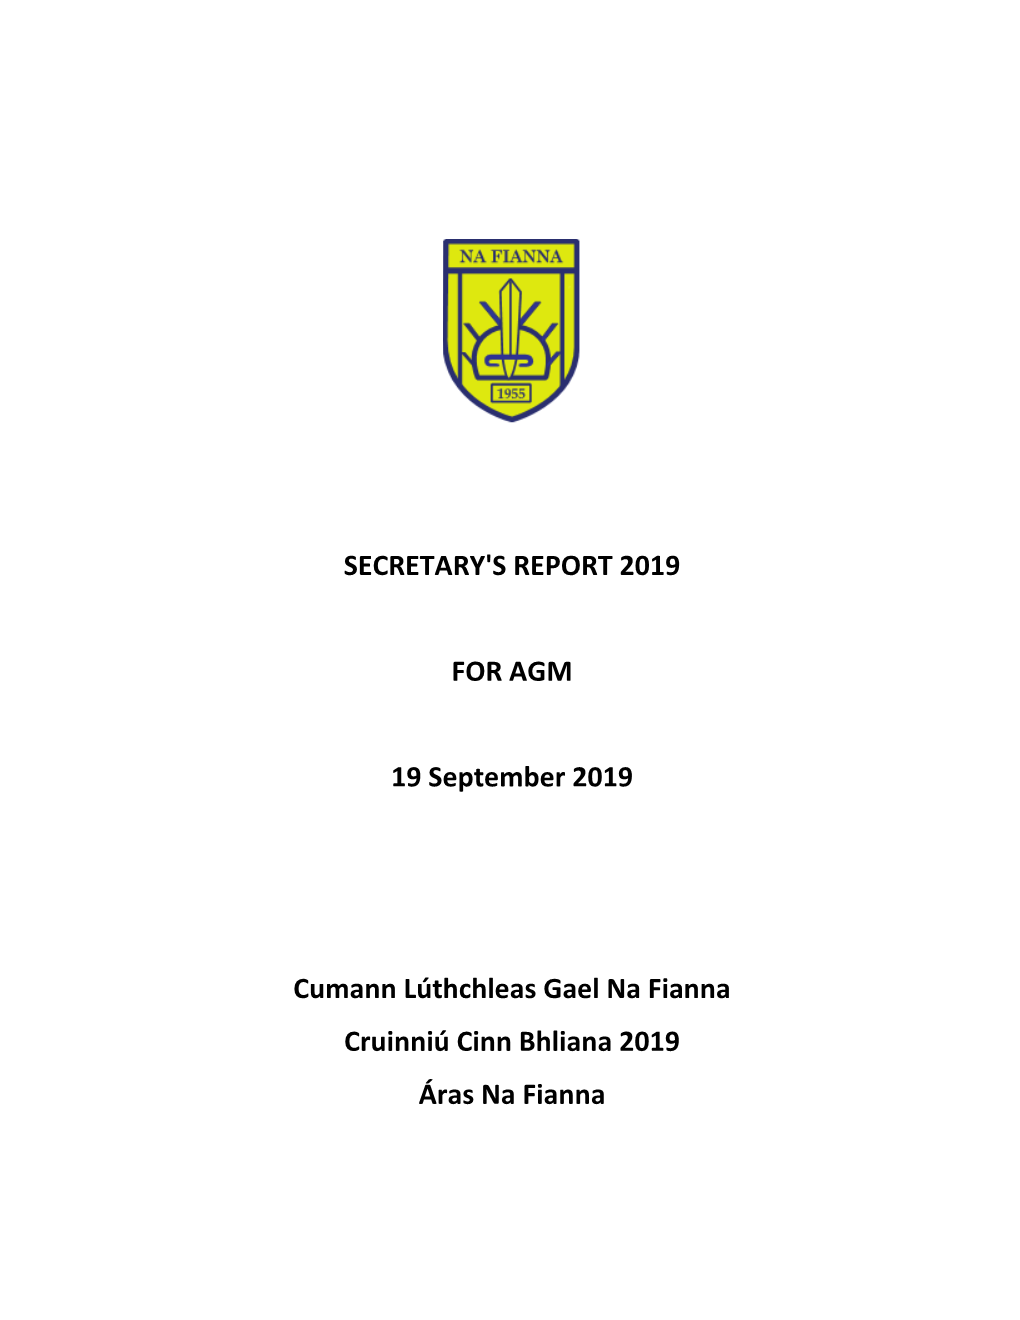 Secretary's Report 2019 for Agm 19